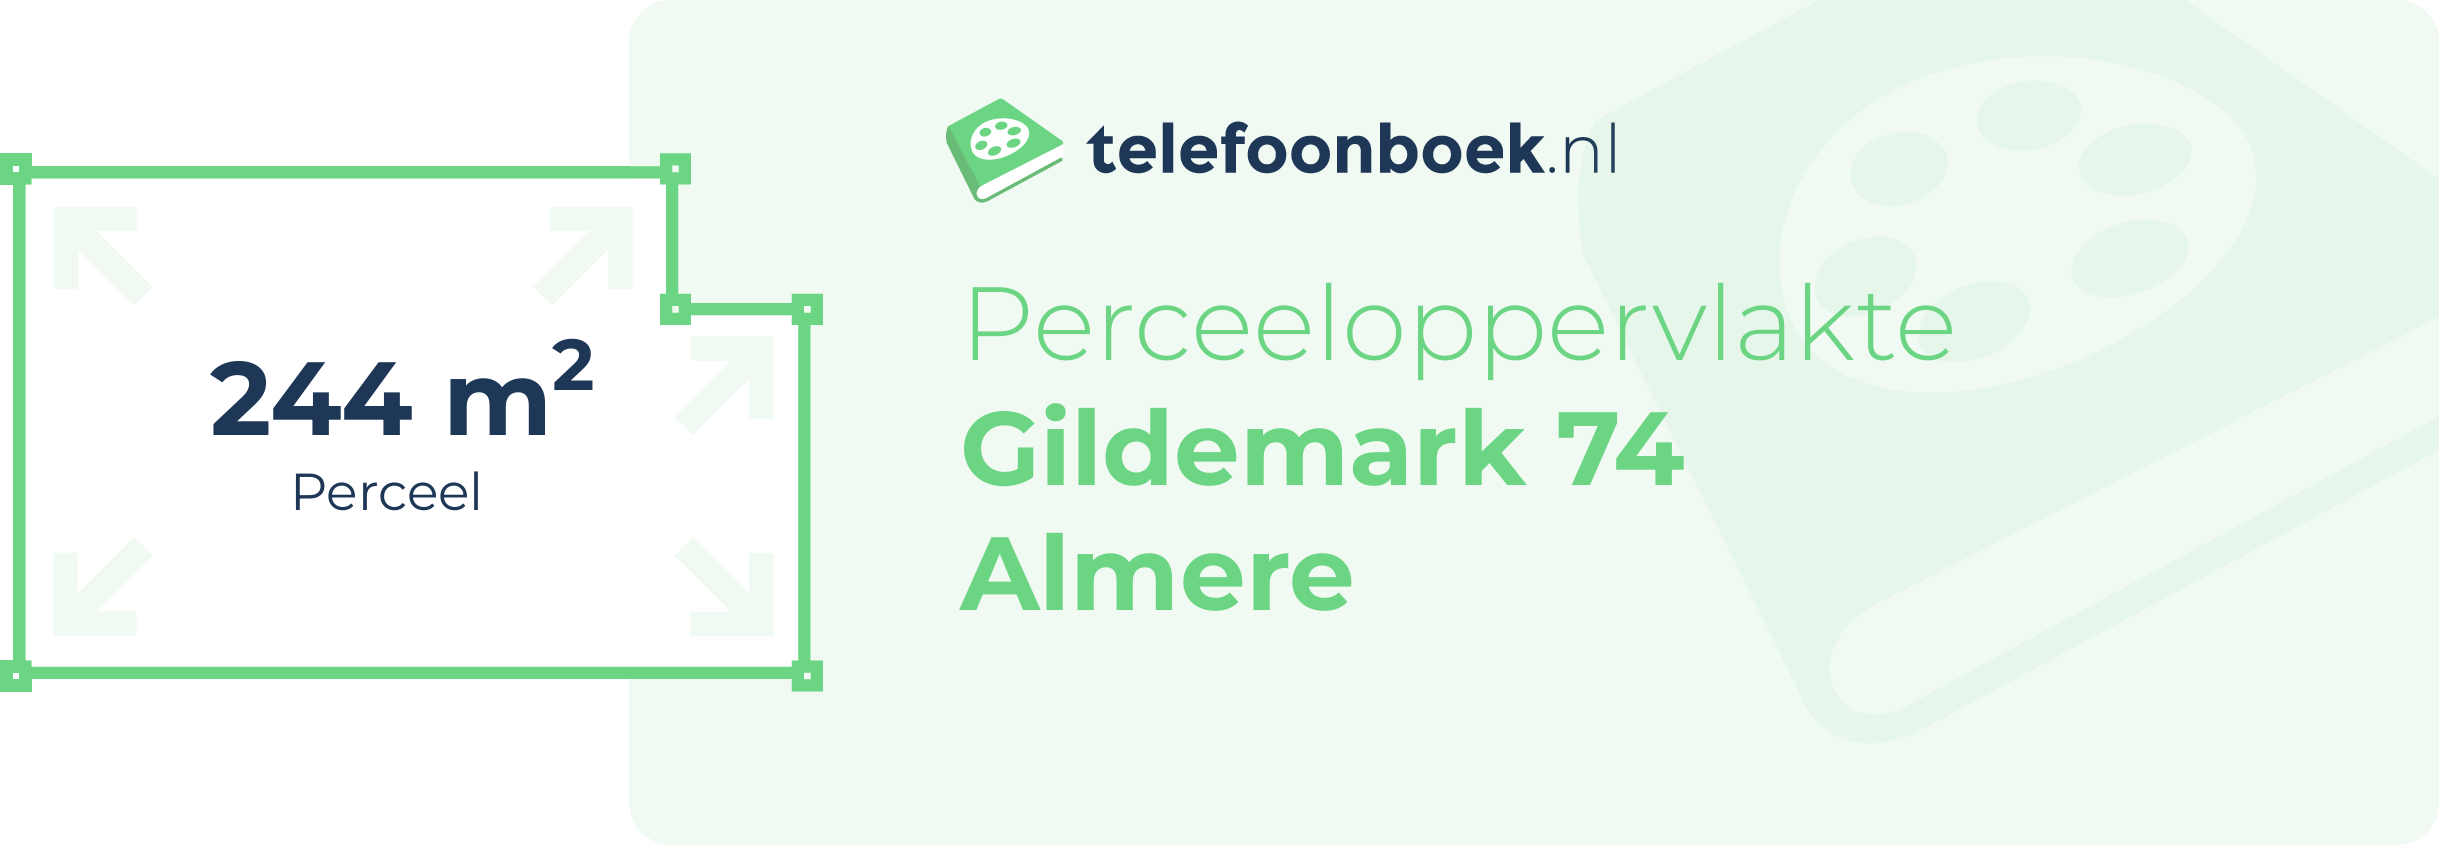 Perceeloppervlakte Gildemark 74 Almere